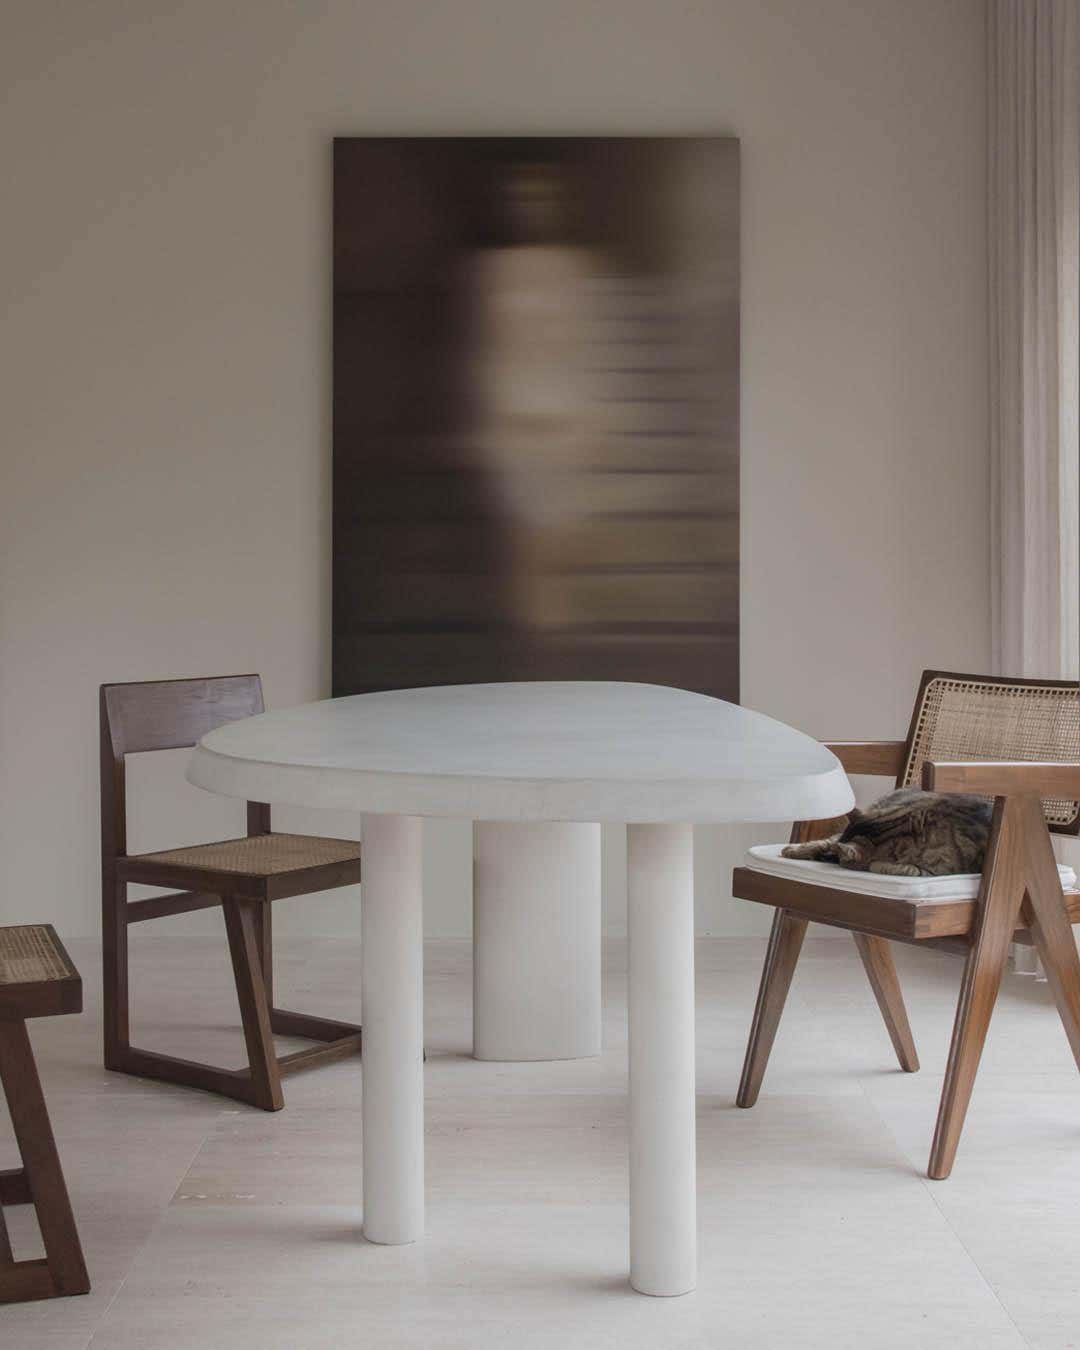 Small Table En Forme Libre by Bicci de Medici - Galerie Philia